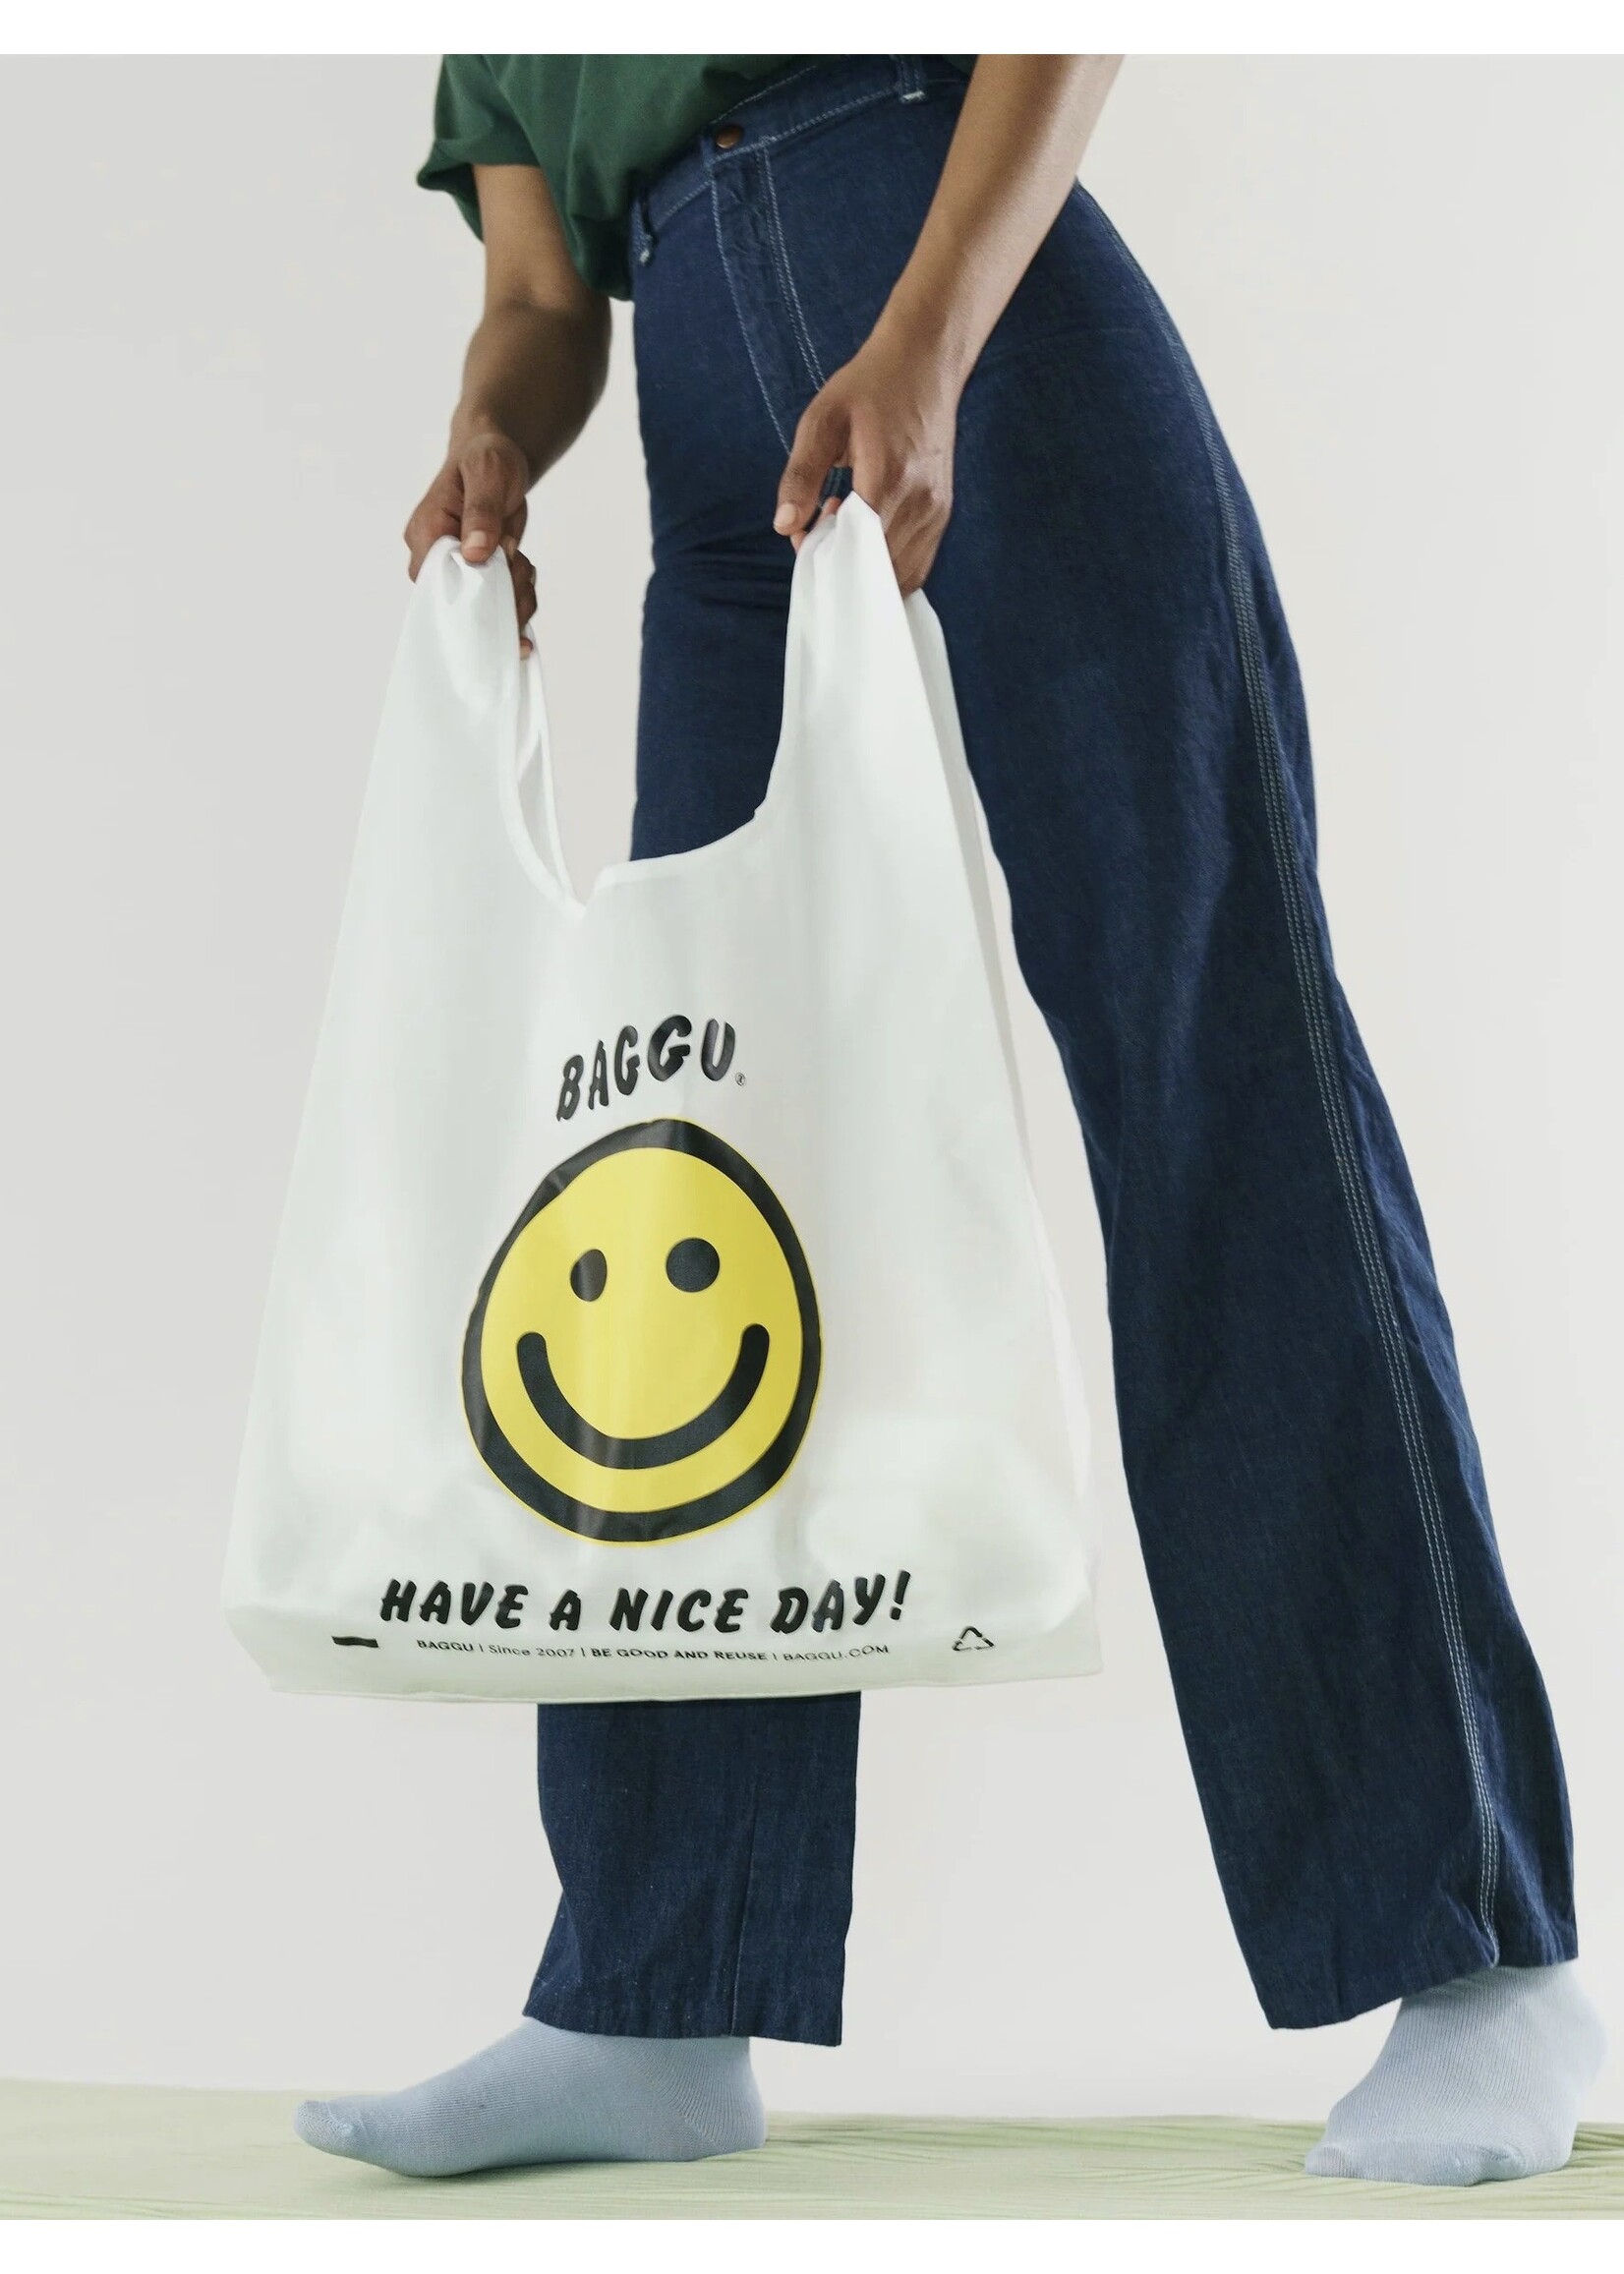 Baggu Reusable "standard" bags by BAGGU